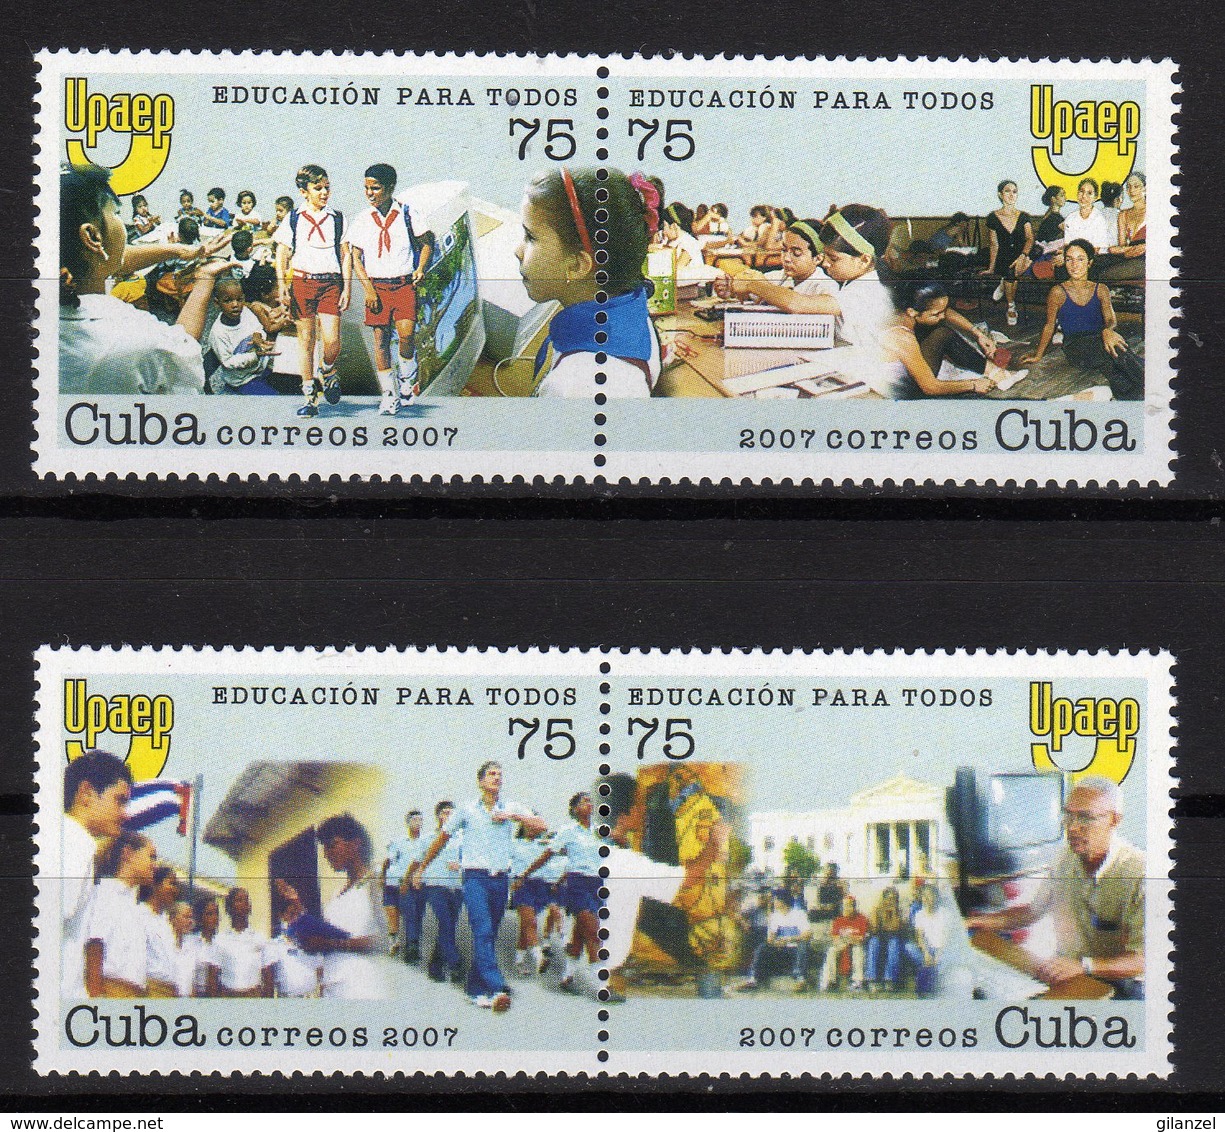 Cuba 2007 UPAEP EDUCACION PARA TODOS MNH Se-tenant - Unused Stamps